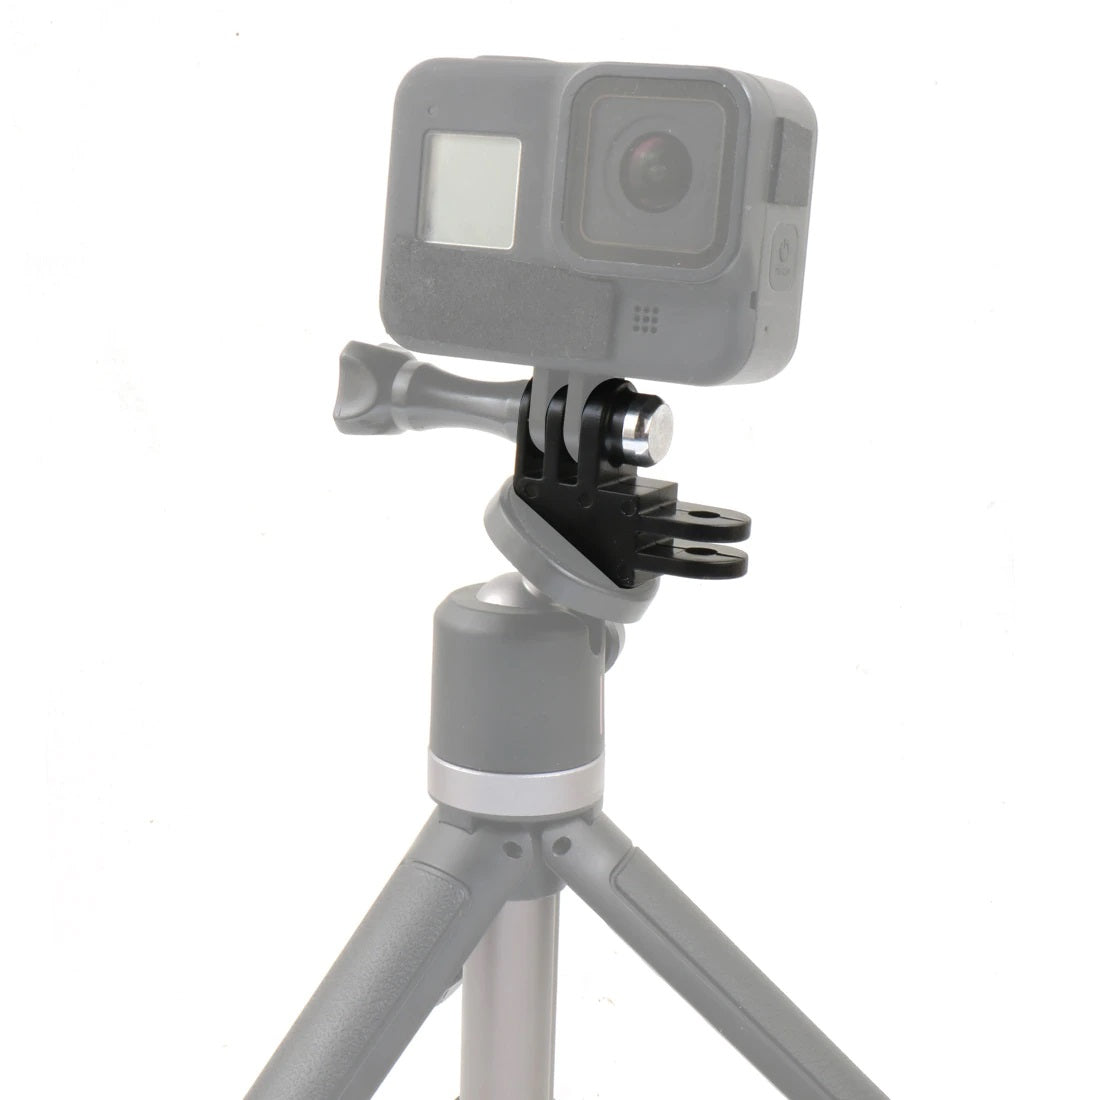 Vertical Mount Adapter GoPro,DJI Osmo,Insta 360 Cameras